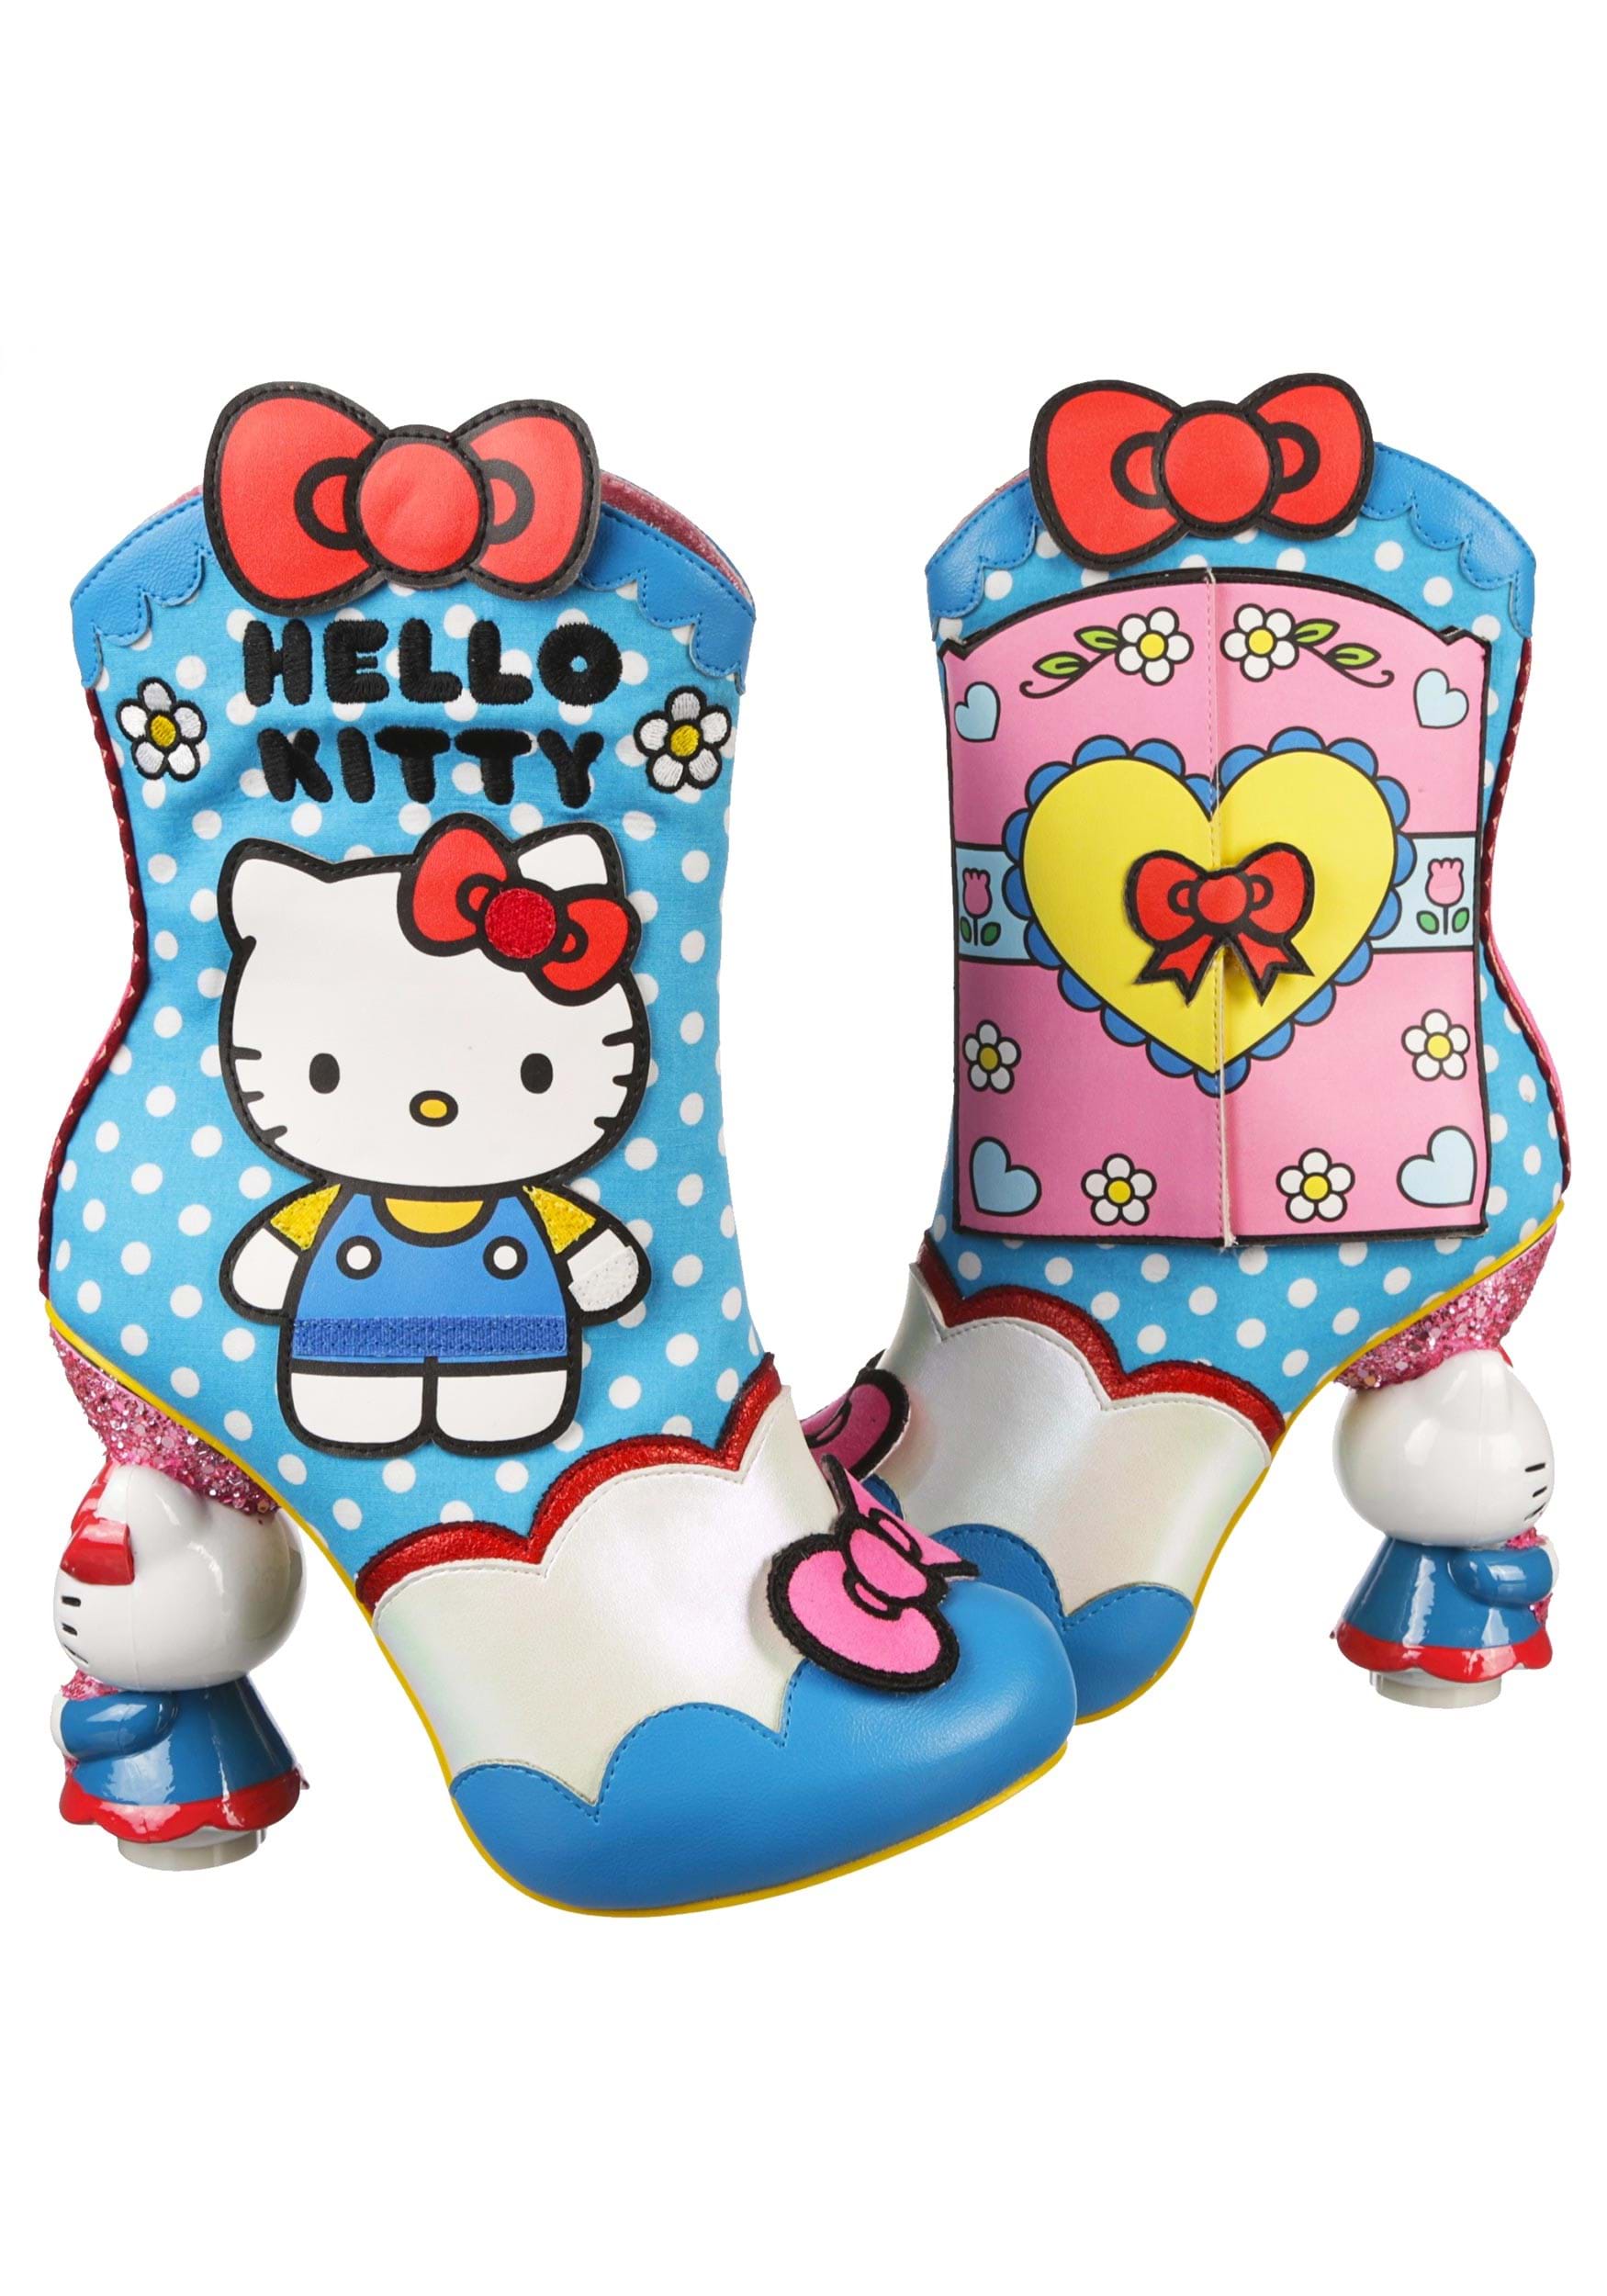 Irregular Choice Hello Kitty Playing Dress Up Boots